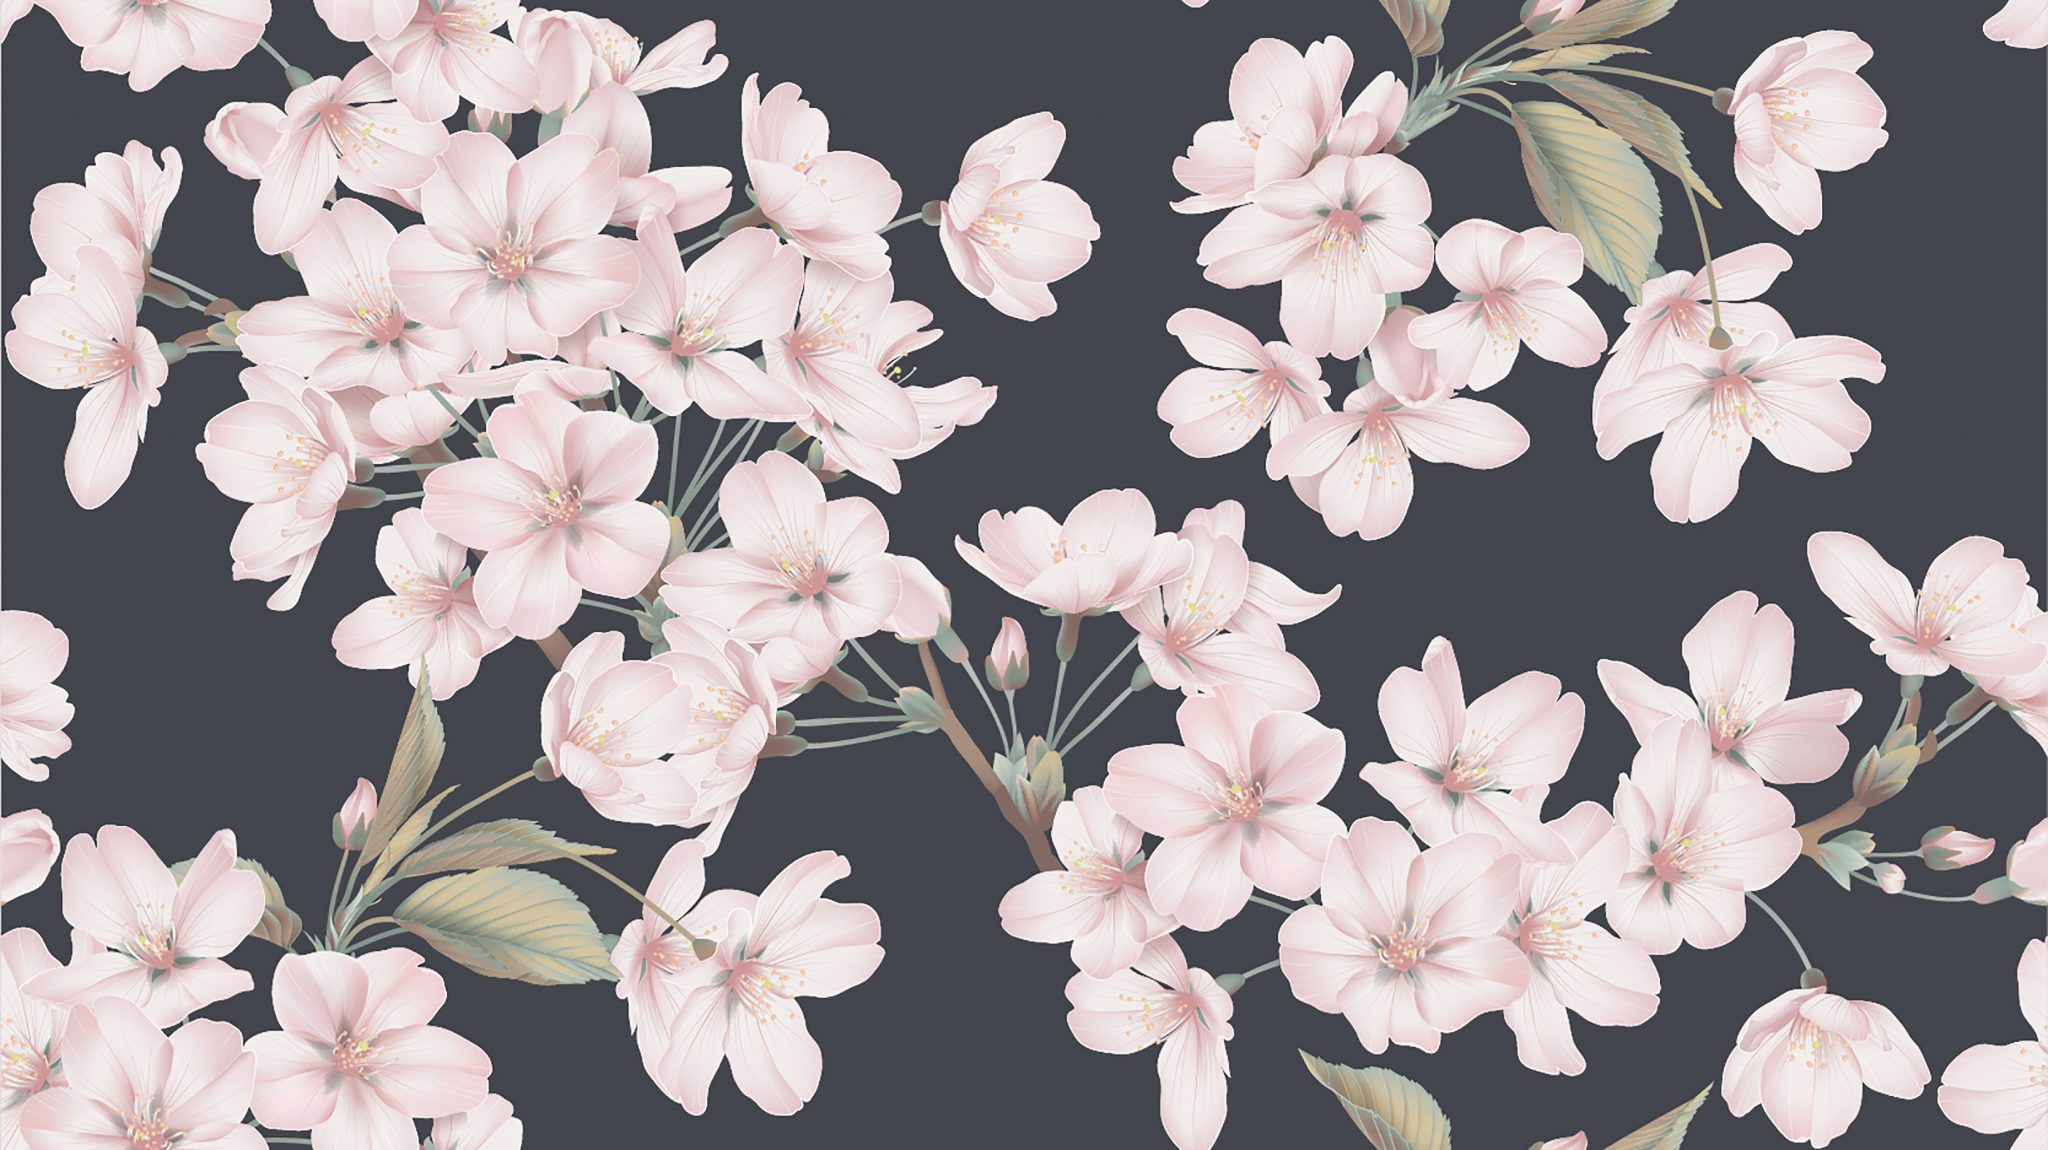 80+ Beautiful Flower Wallpaper For iPhone | IdeasToKnow